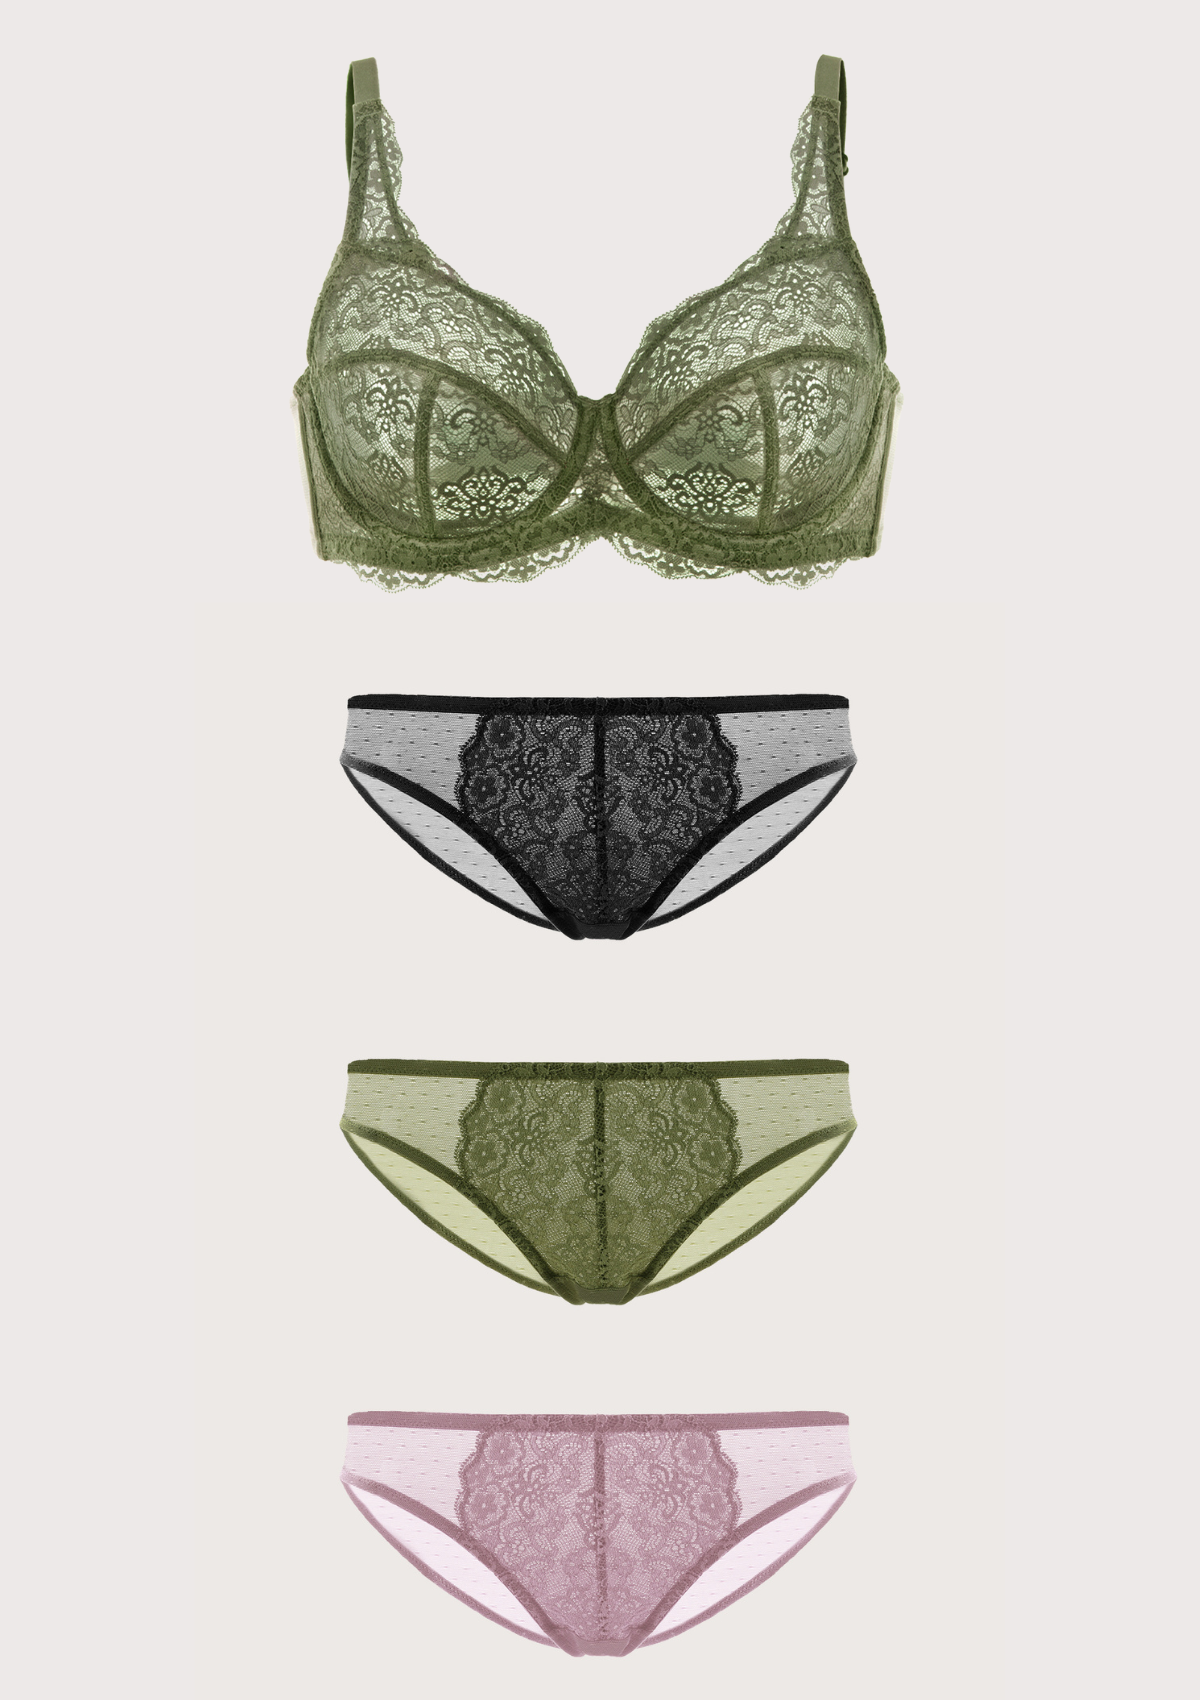 HSIA All-Over Floral Lace Unlined Bra: Minimizer Bra For Heavy Breasts - Dark Green / 42 / DD/E